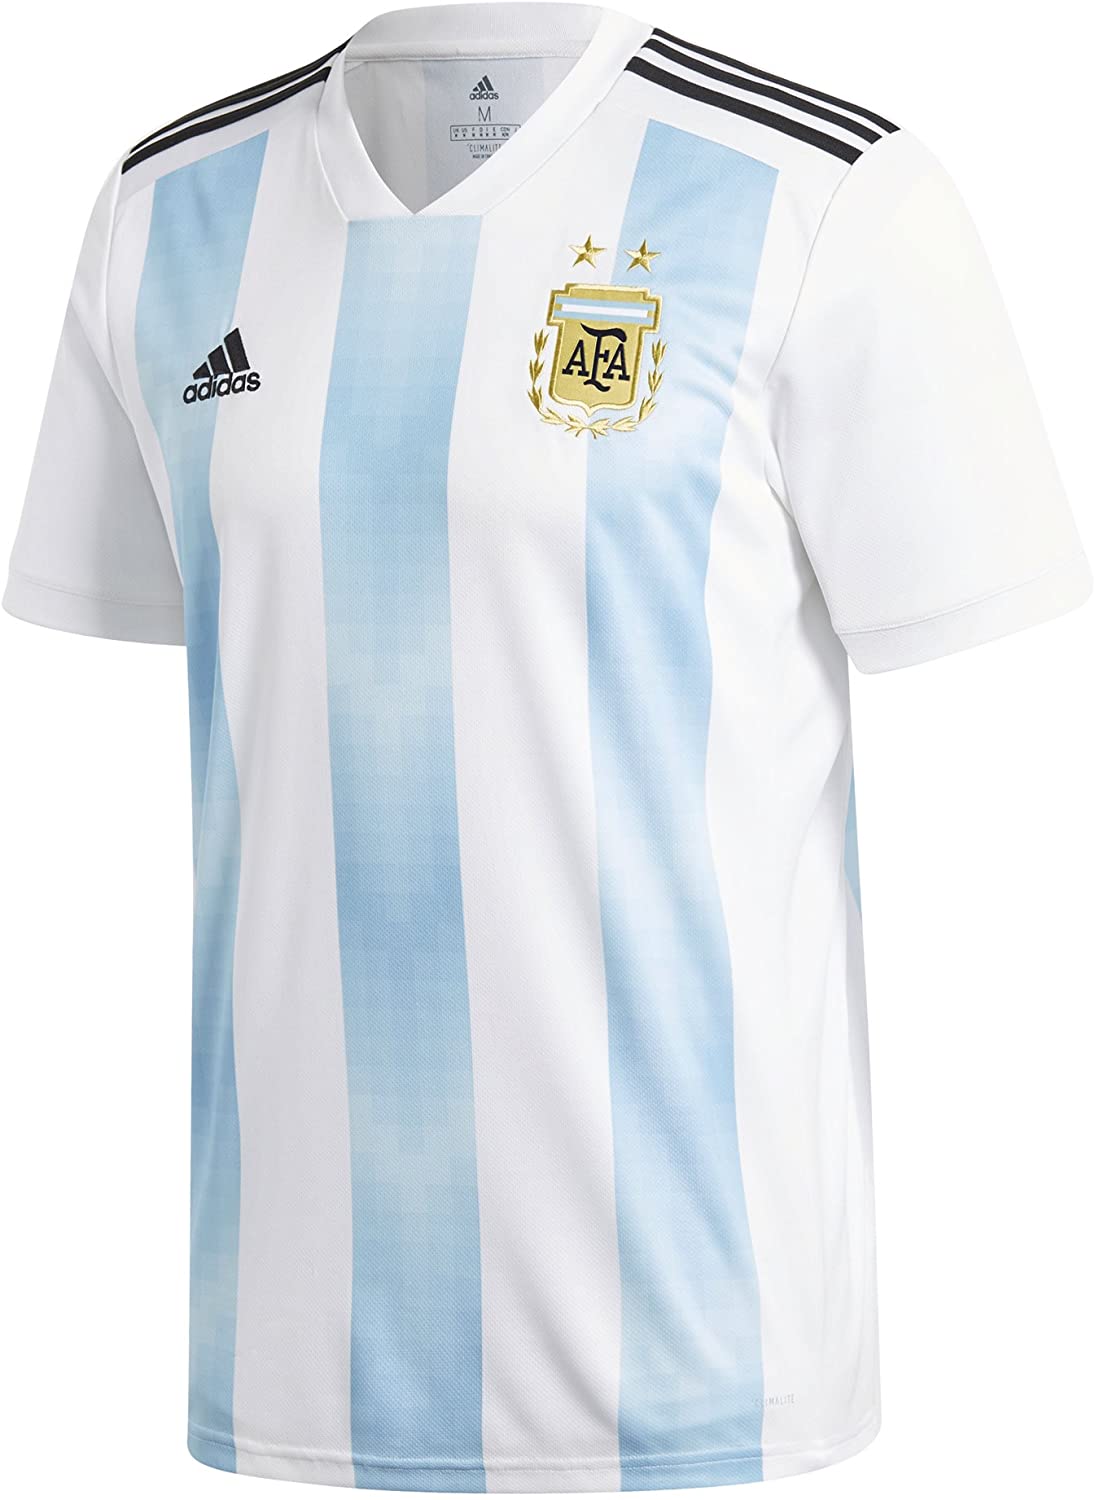 argentina jerseys